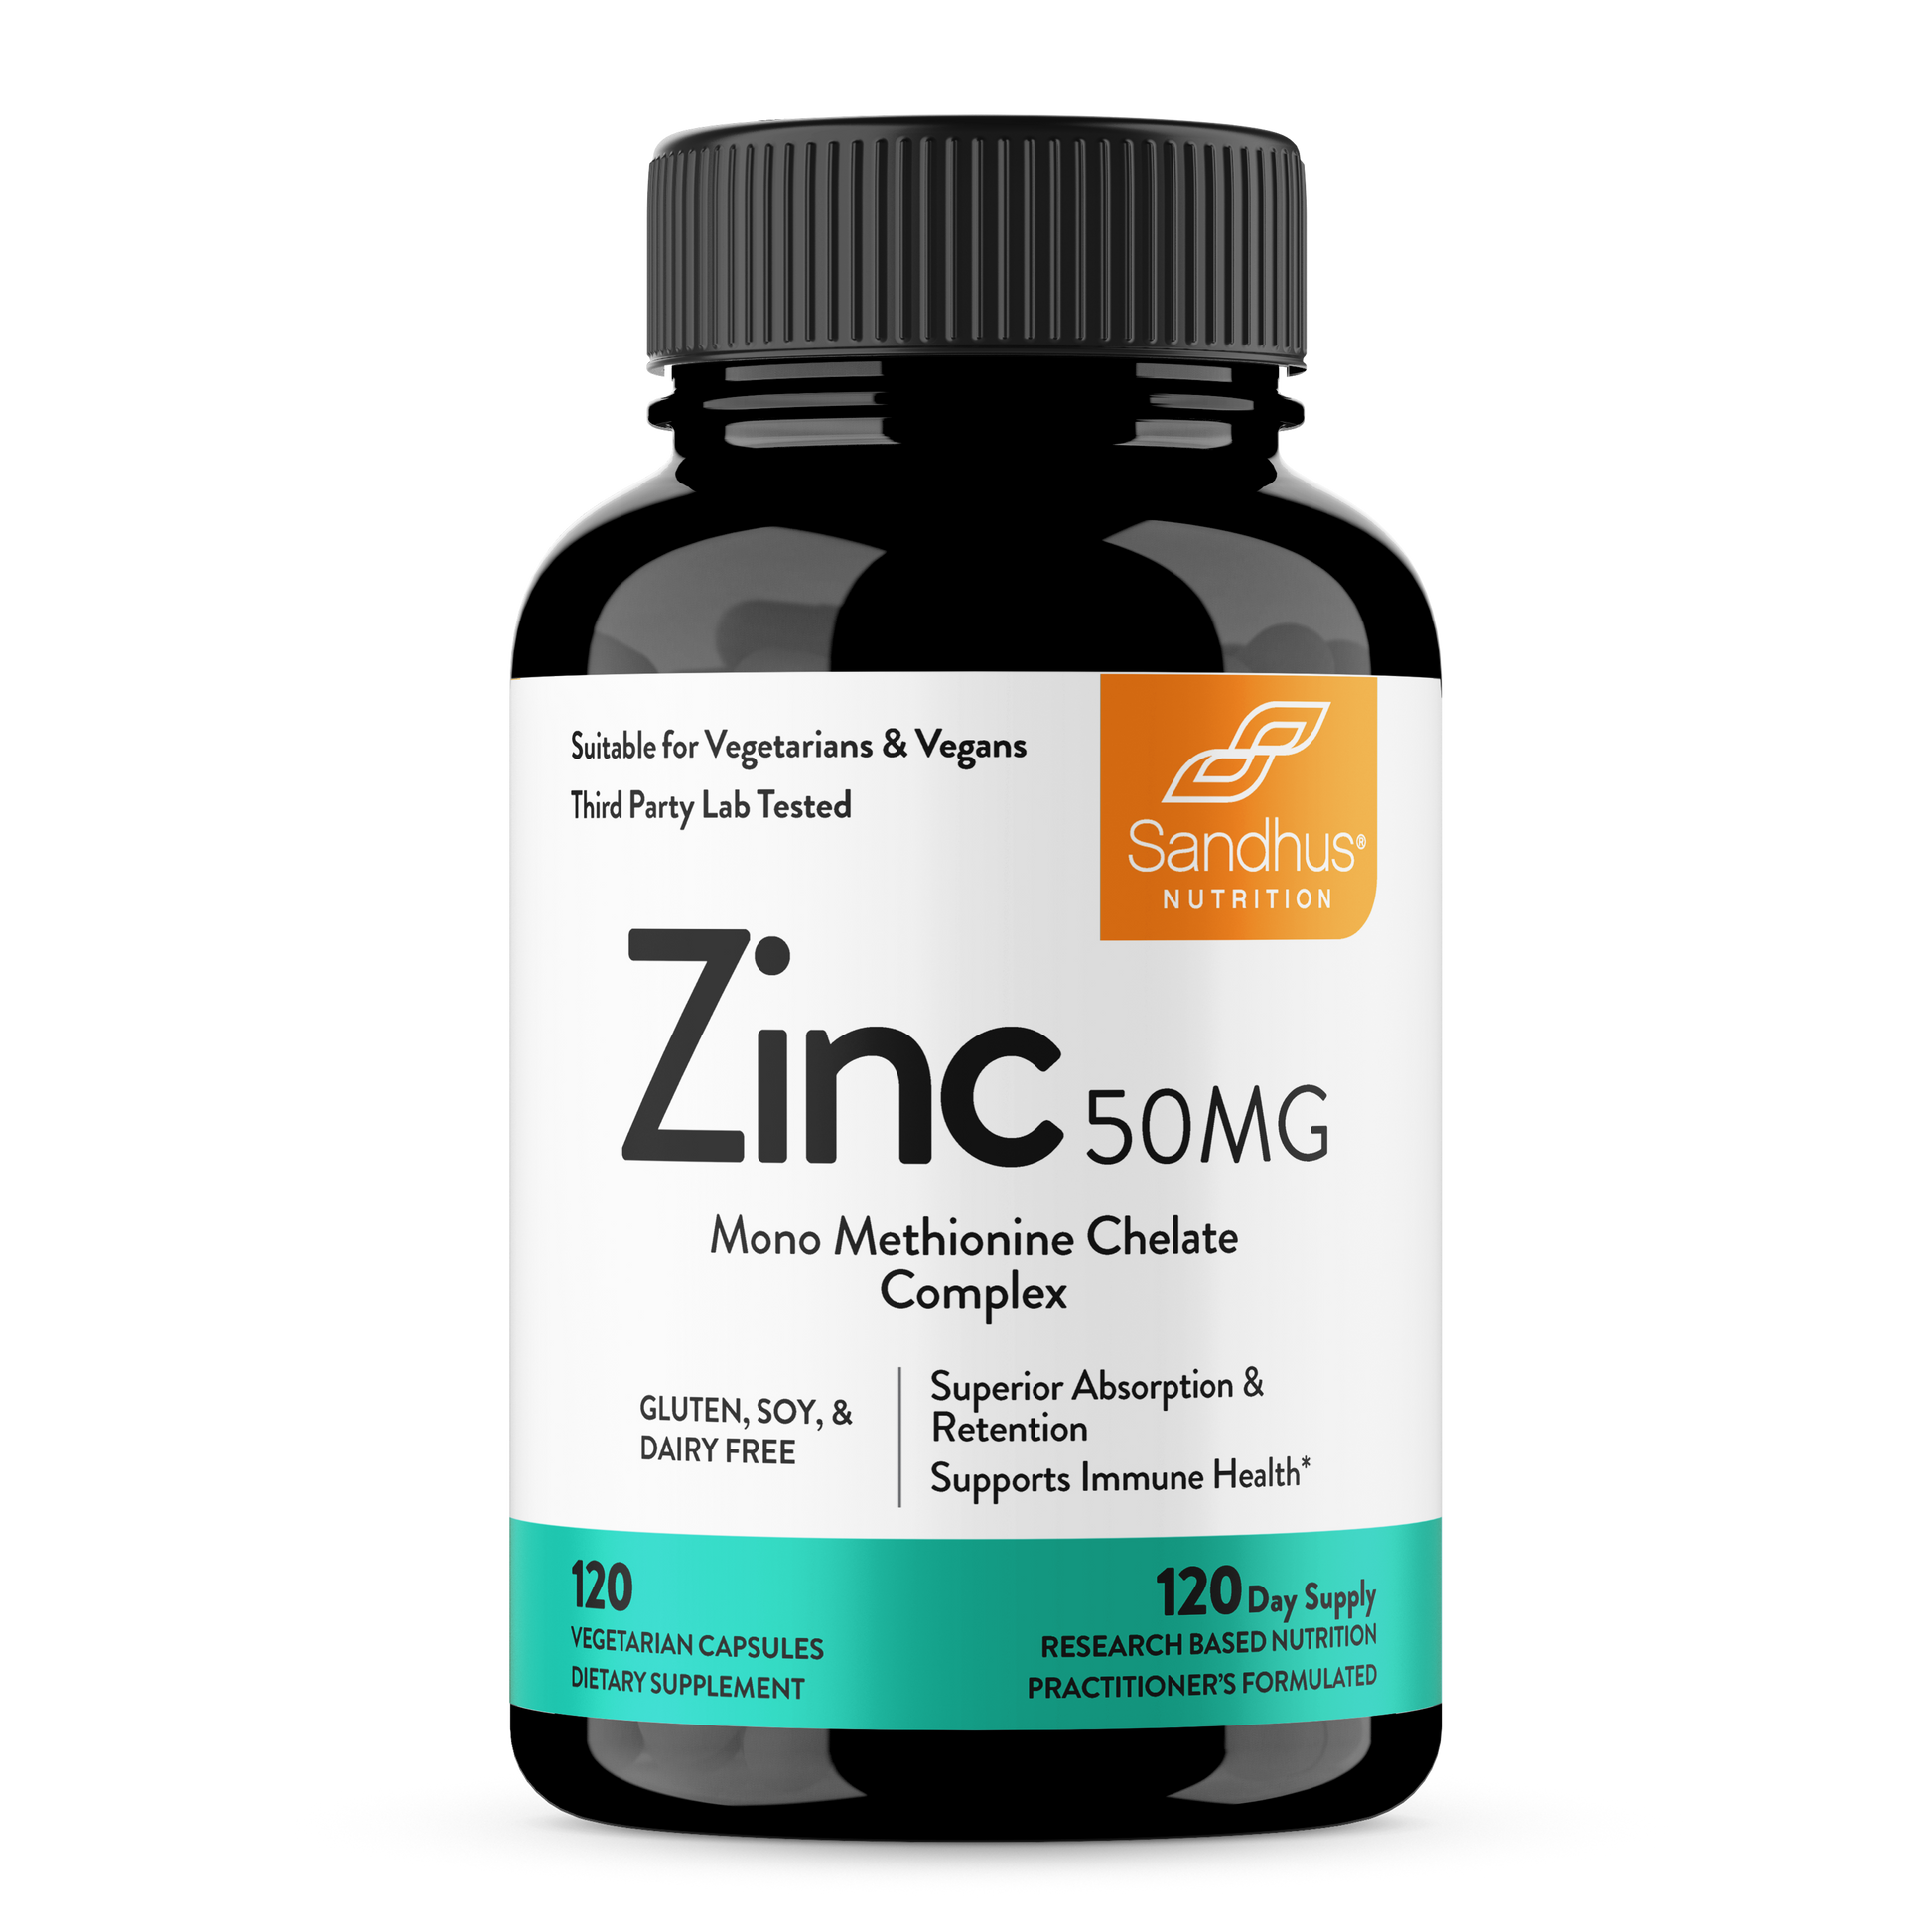 zinc-50-mg-capsules